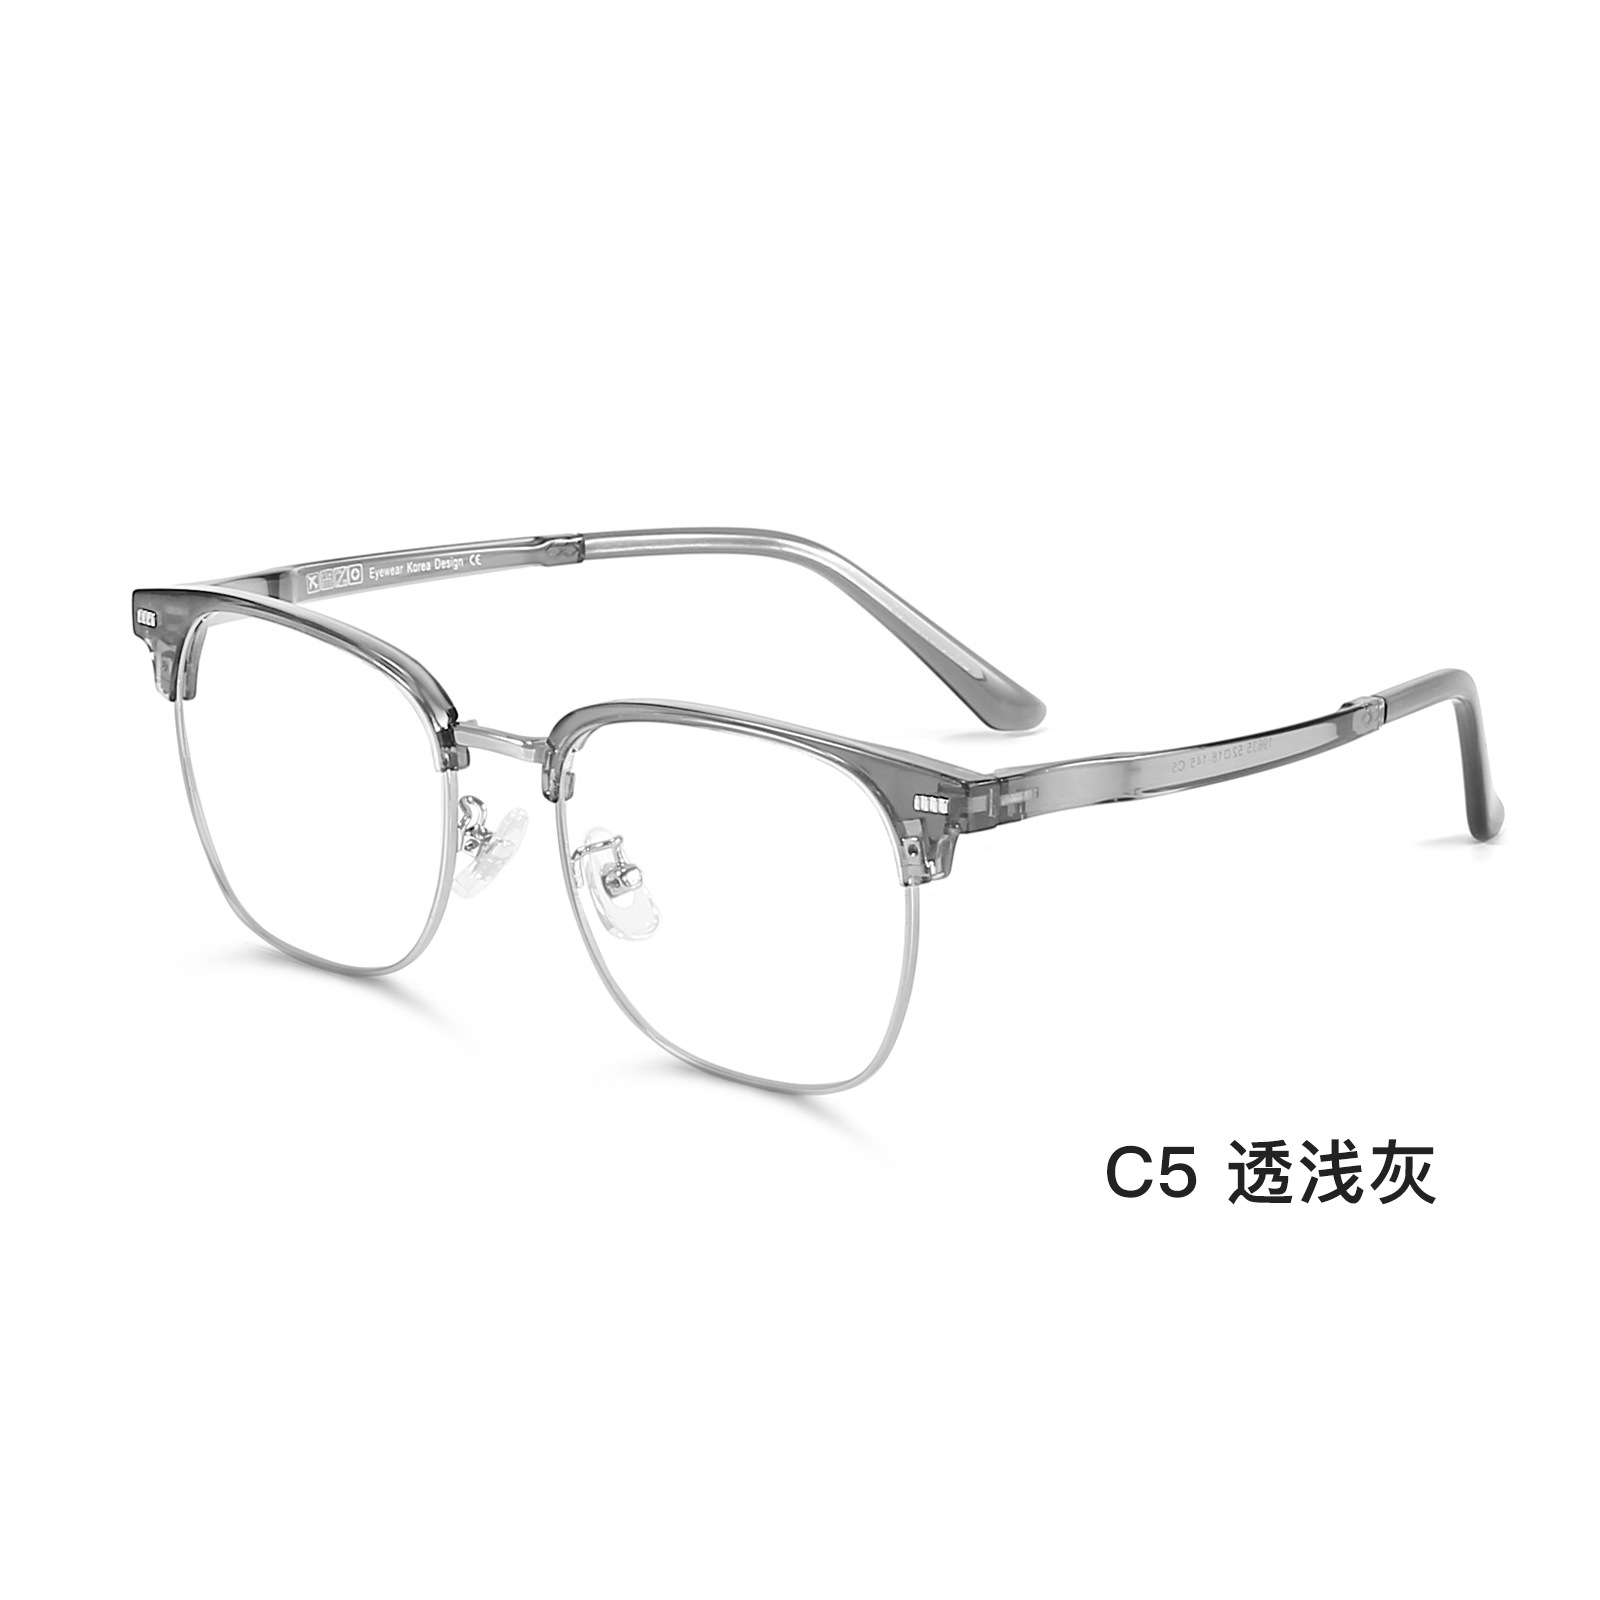 Light Transparent Gray Business Casual Glasses Frame Vintage Eyebrow Frame Comfort Trend Men's with Glasses Option Danyang Wholesale